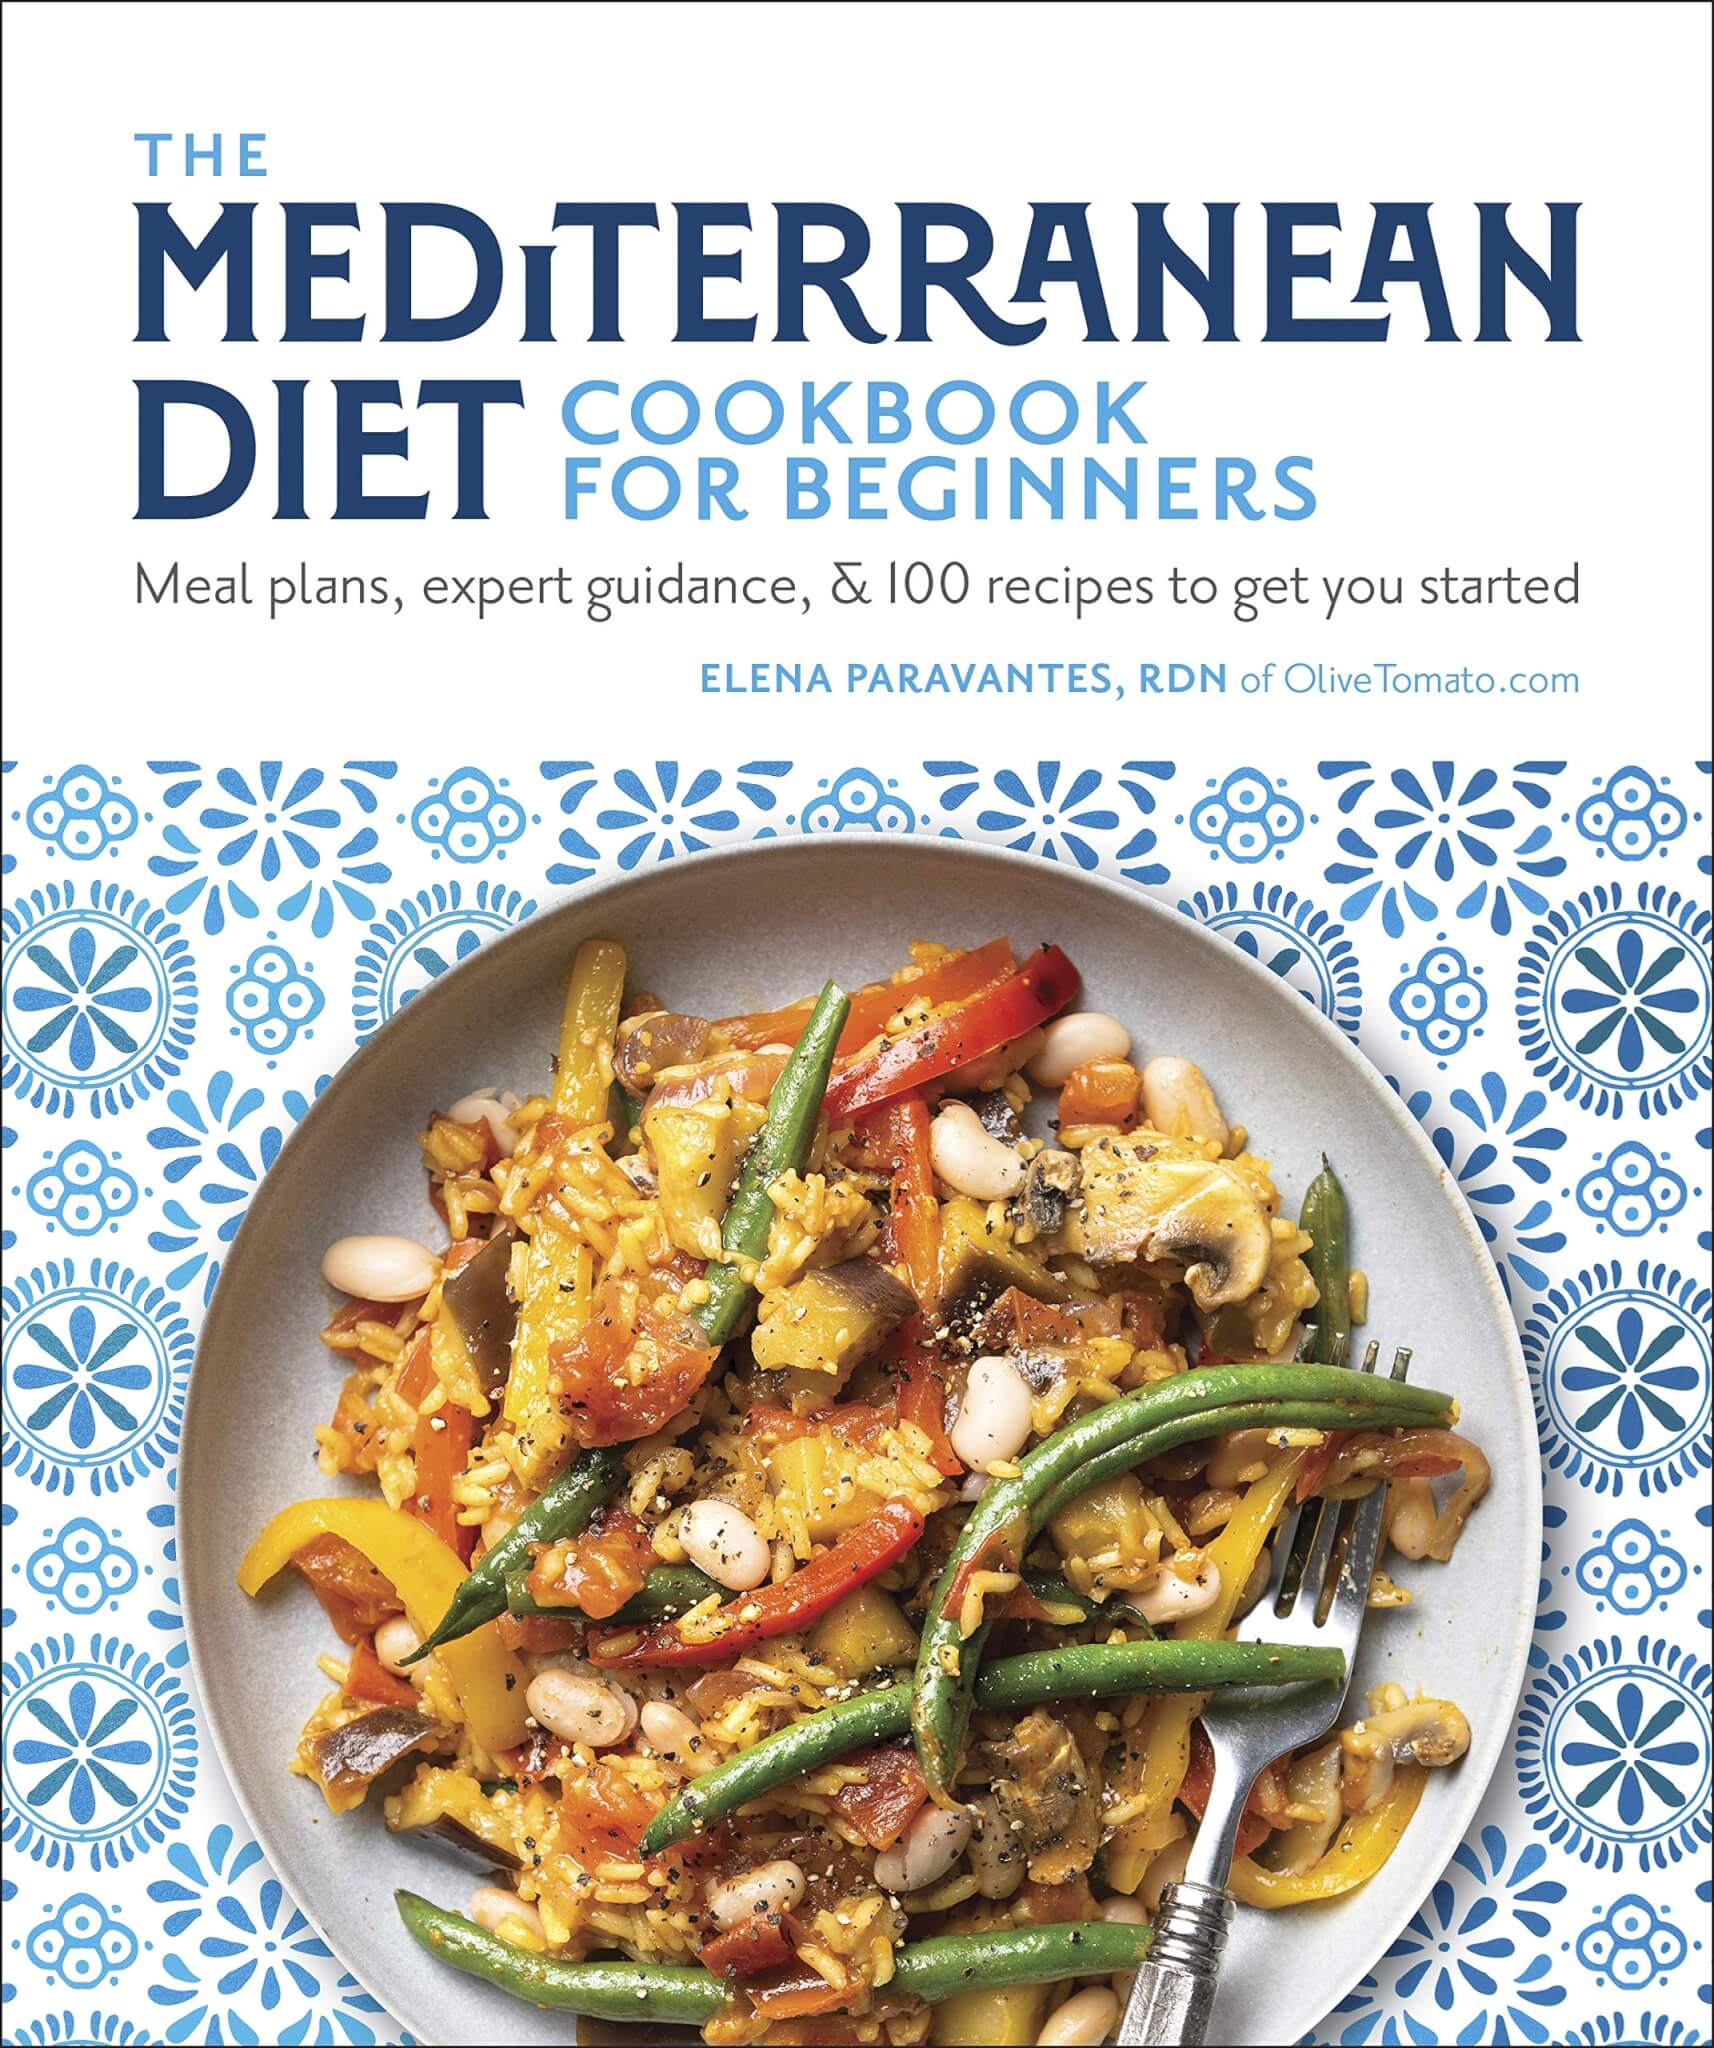 "The Mediterranean Diet Cookbook For Beginners" by Elena Paravantes, R.D.N.